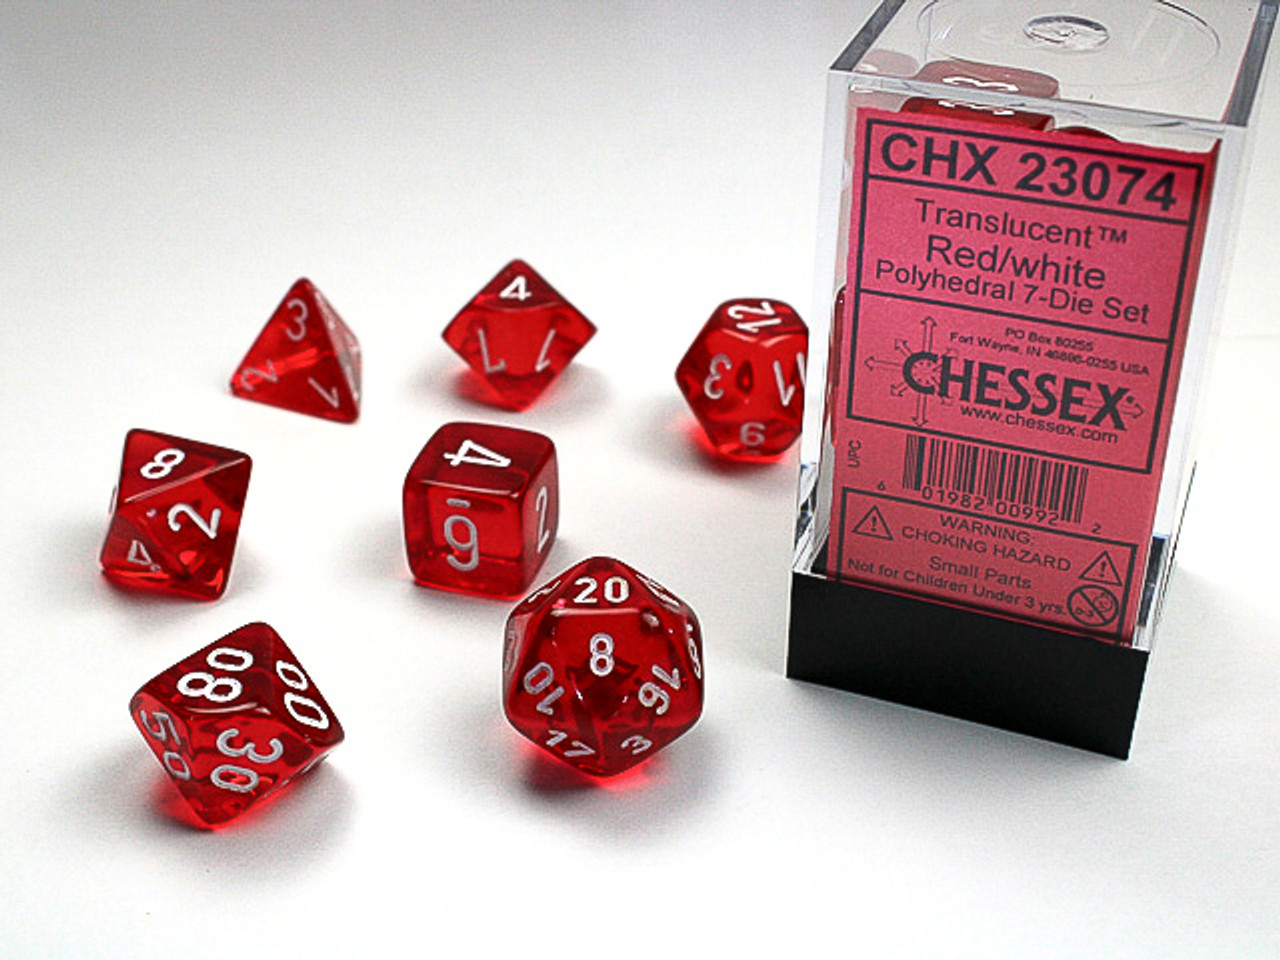 Chessex Translucent Polyhedral Red/White 7-Die Set